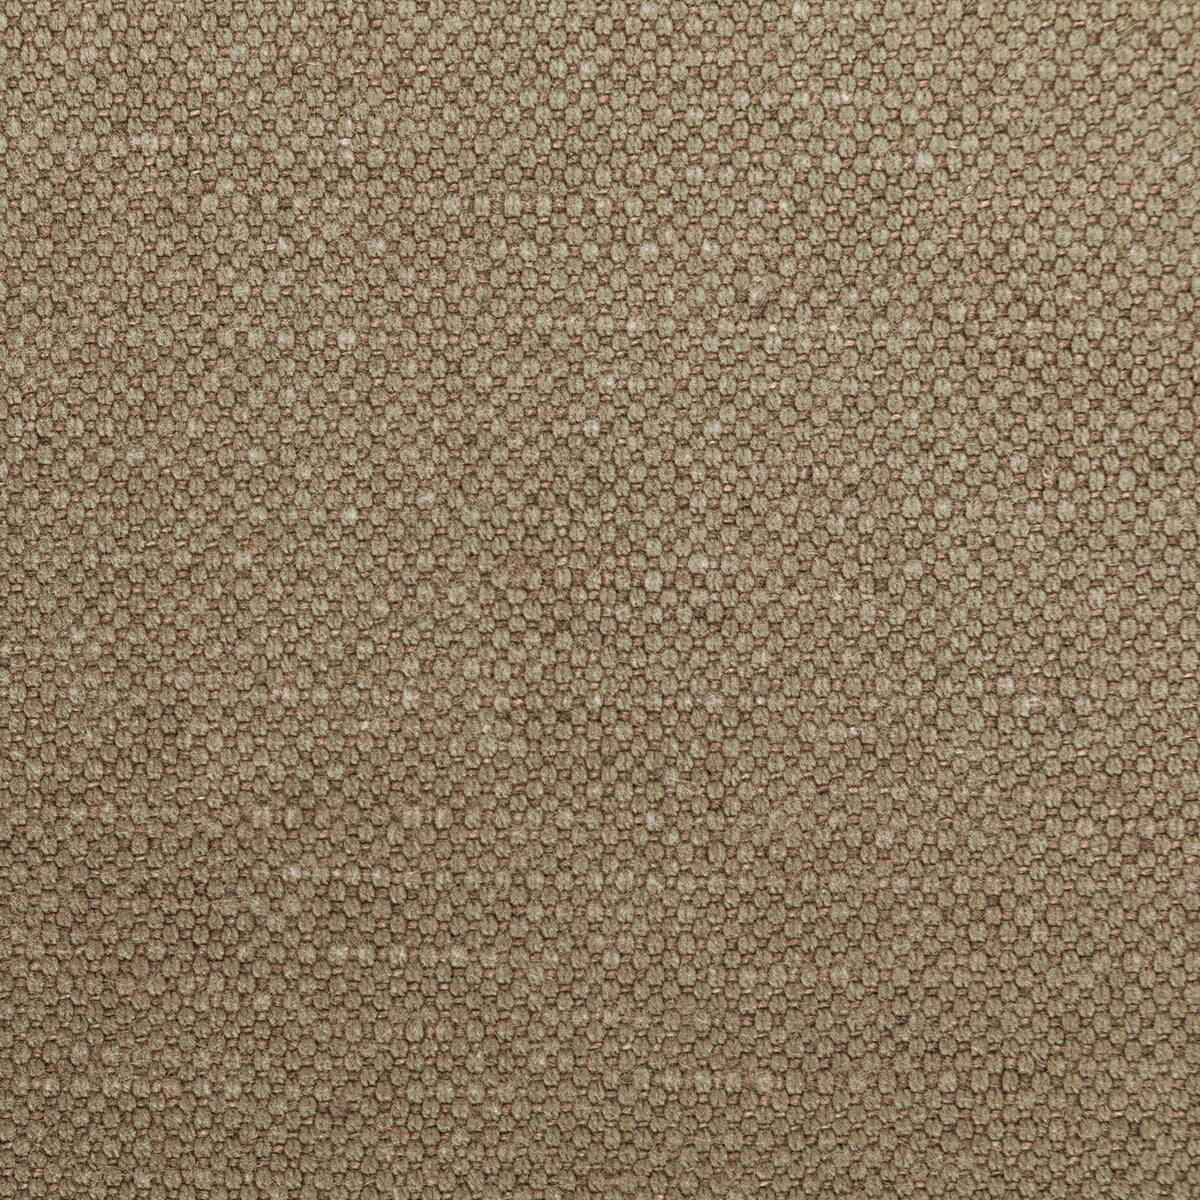 Carson fabric in slate color - pattern 36282.1123.0 - by Kravet Basics